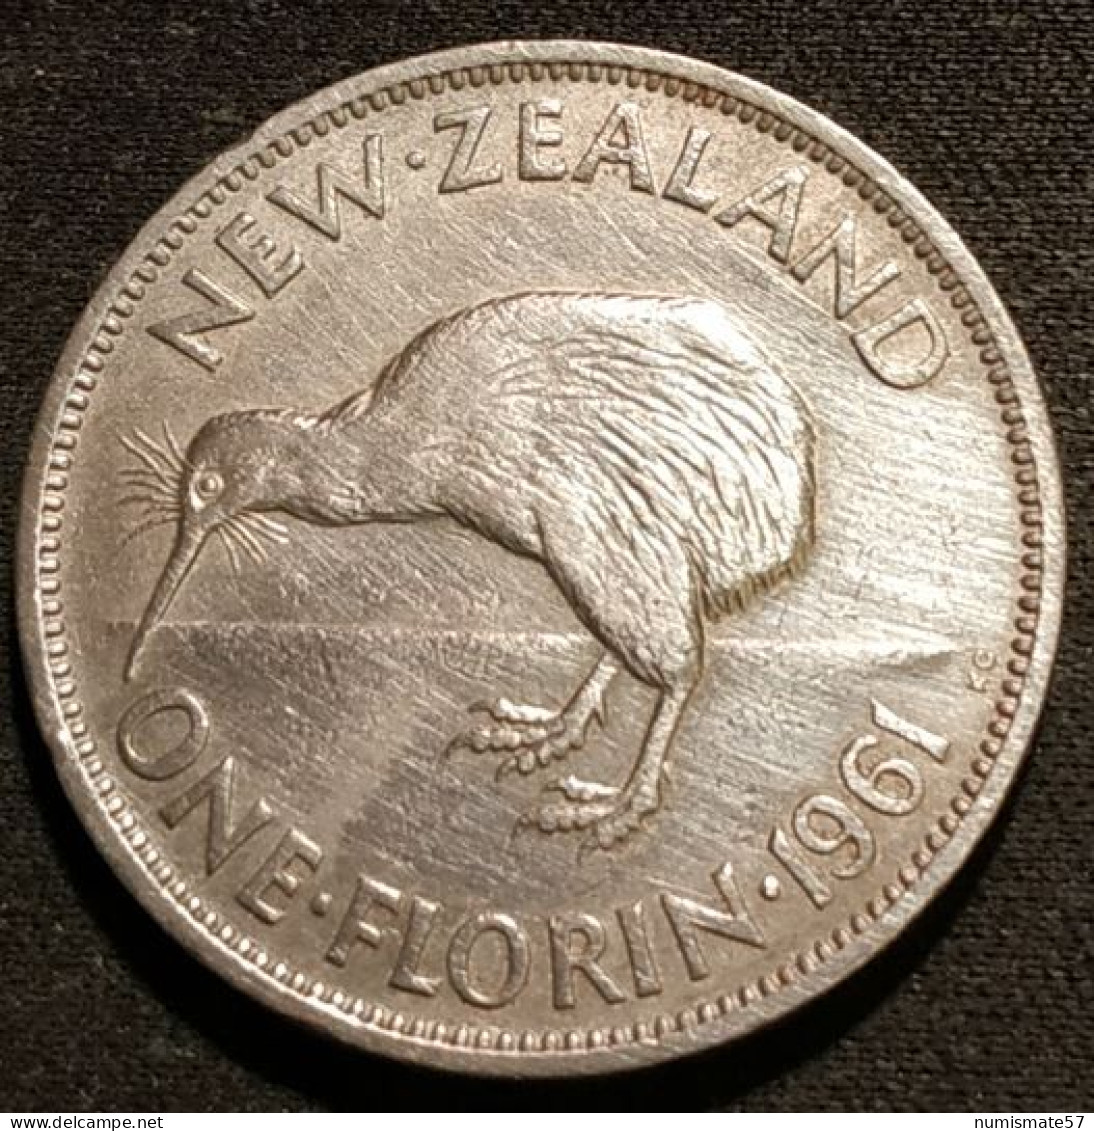 NOUVELLE ZELANDE - NEW ZEALAND - ONE - 1 FLORIN 1961 - Elisabeth II - KM 28.2 - New Zealand